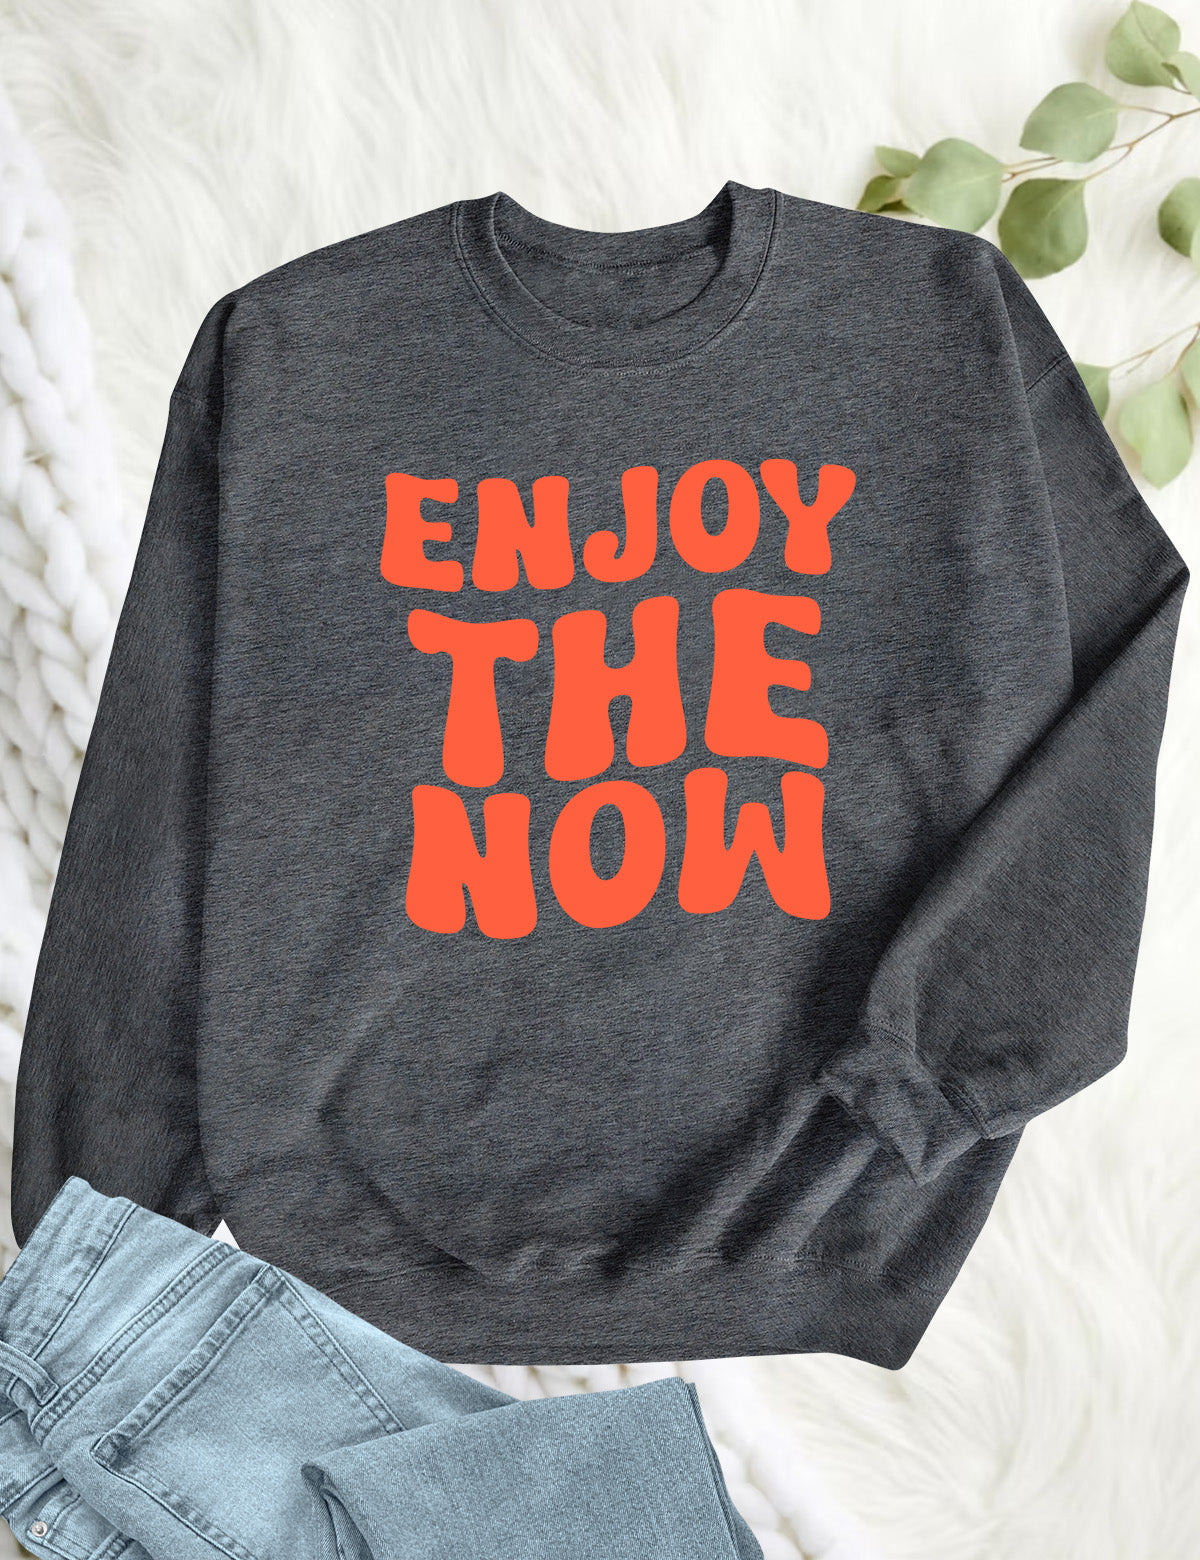 Enjoy The Now Funny Christian Sweatshirt